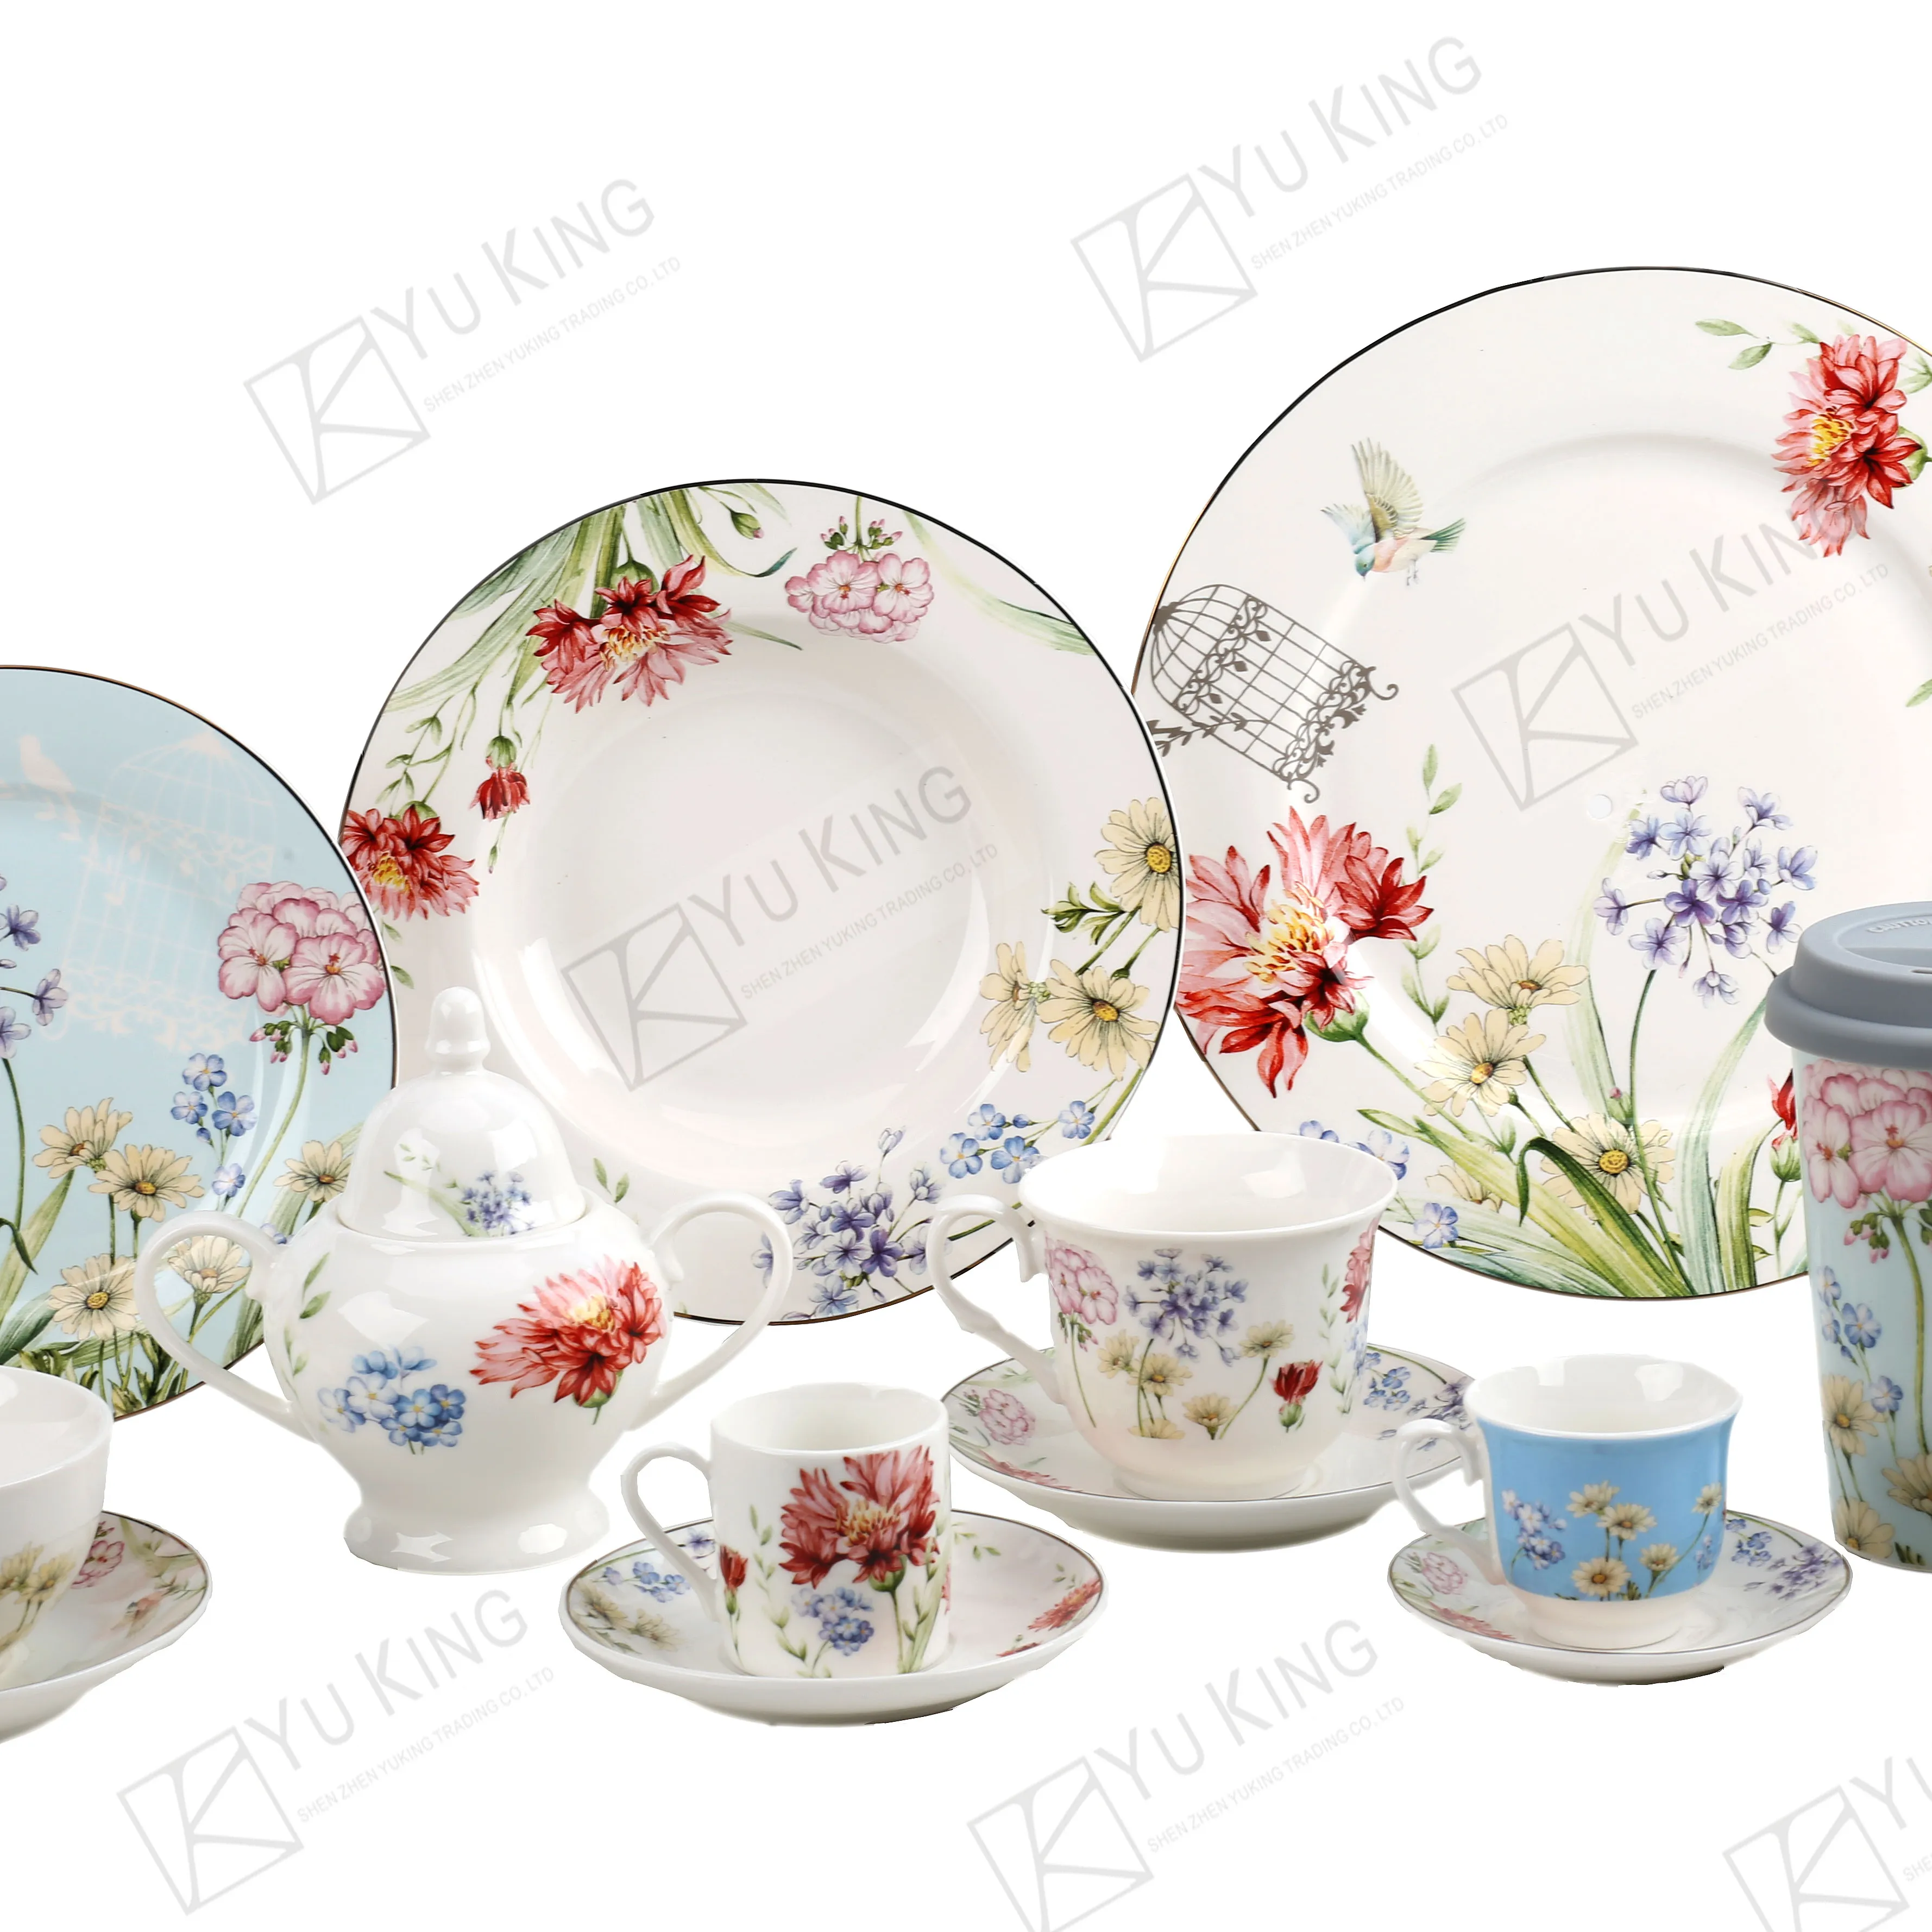 Keramik Piring Makan Porselen Peralatan Makan Set Tulang Baru Cina Ruang Tamu Peralatan Makan Pola Tanaman Bunga Desain